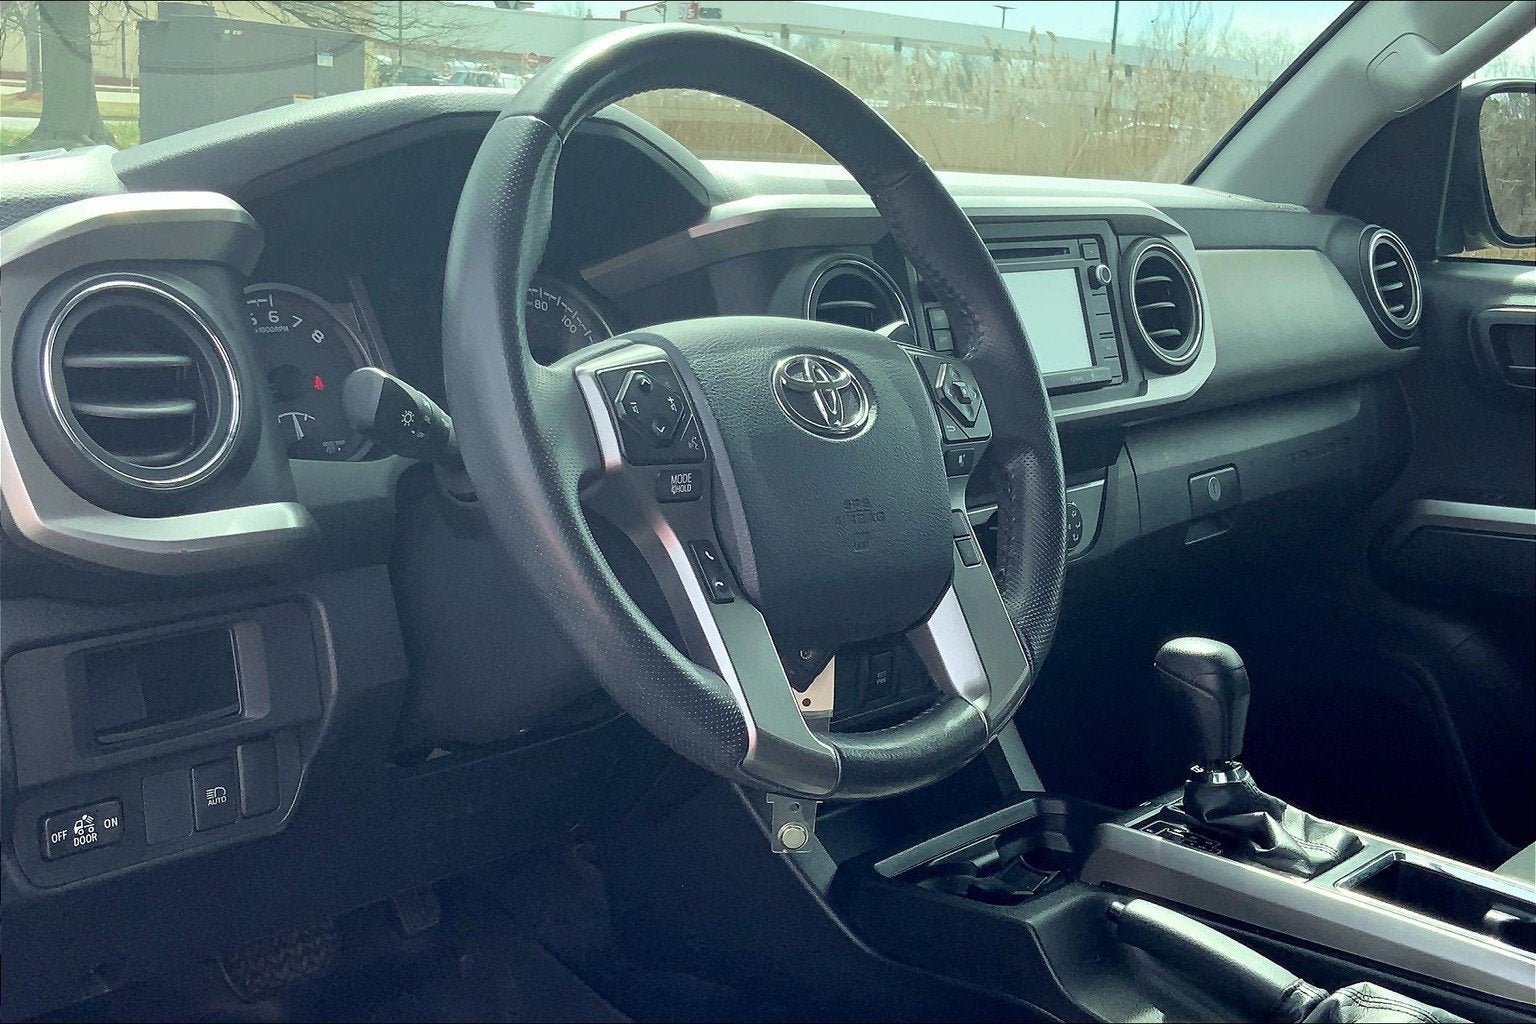 2019 Toyota Tacoma 4WD SR5